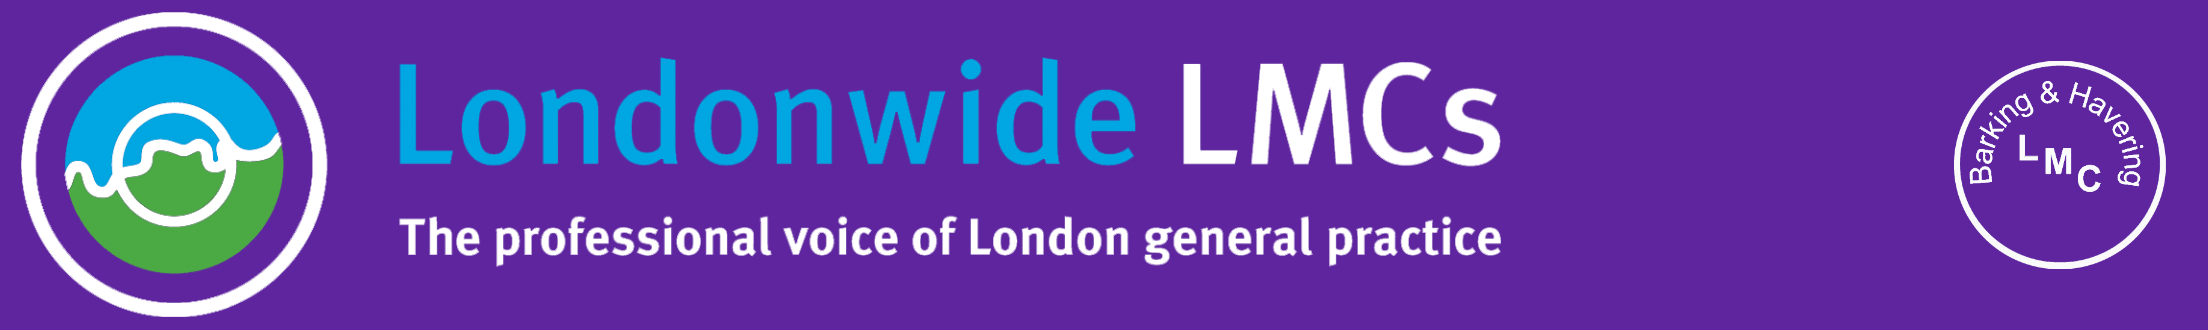 Londonwide LMCs Logo